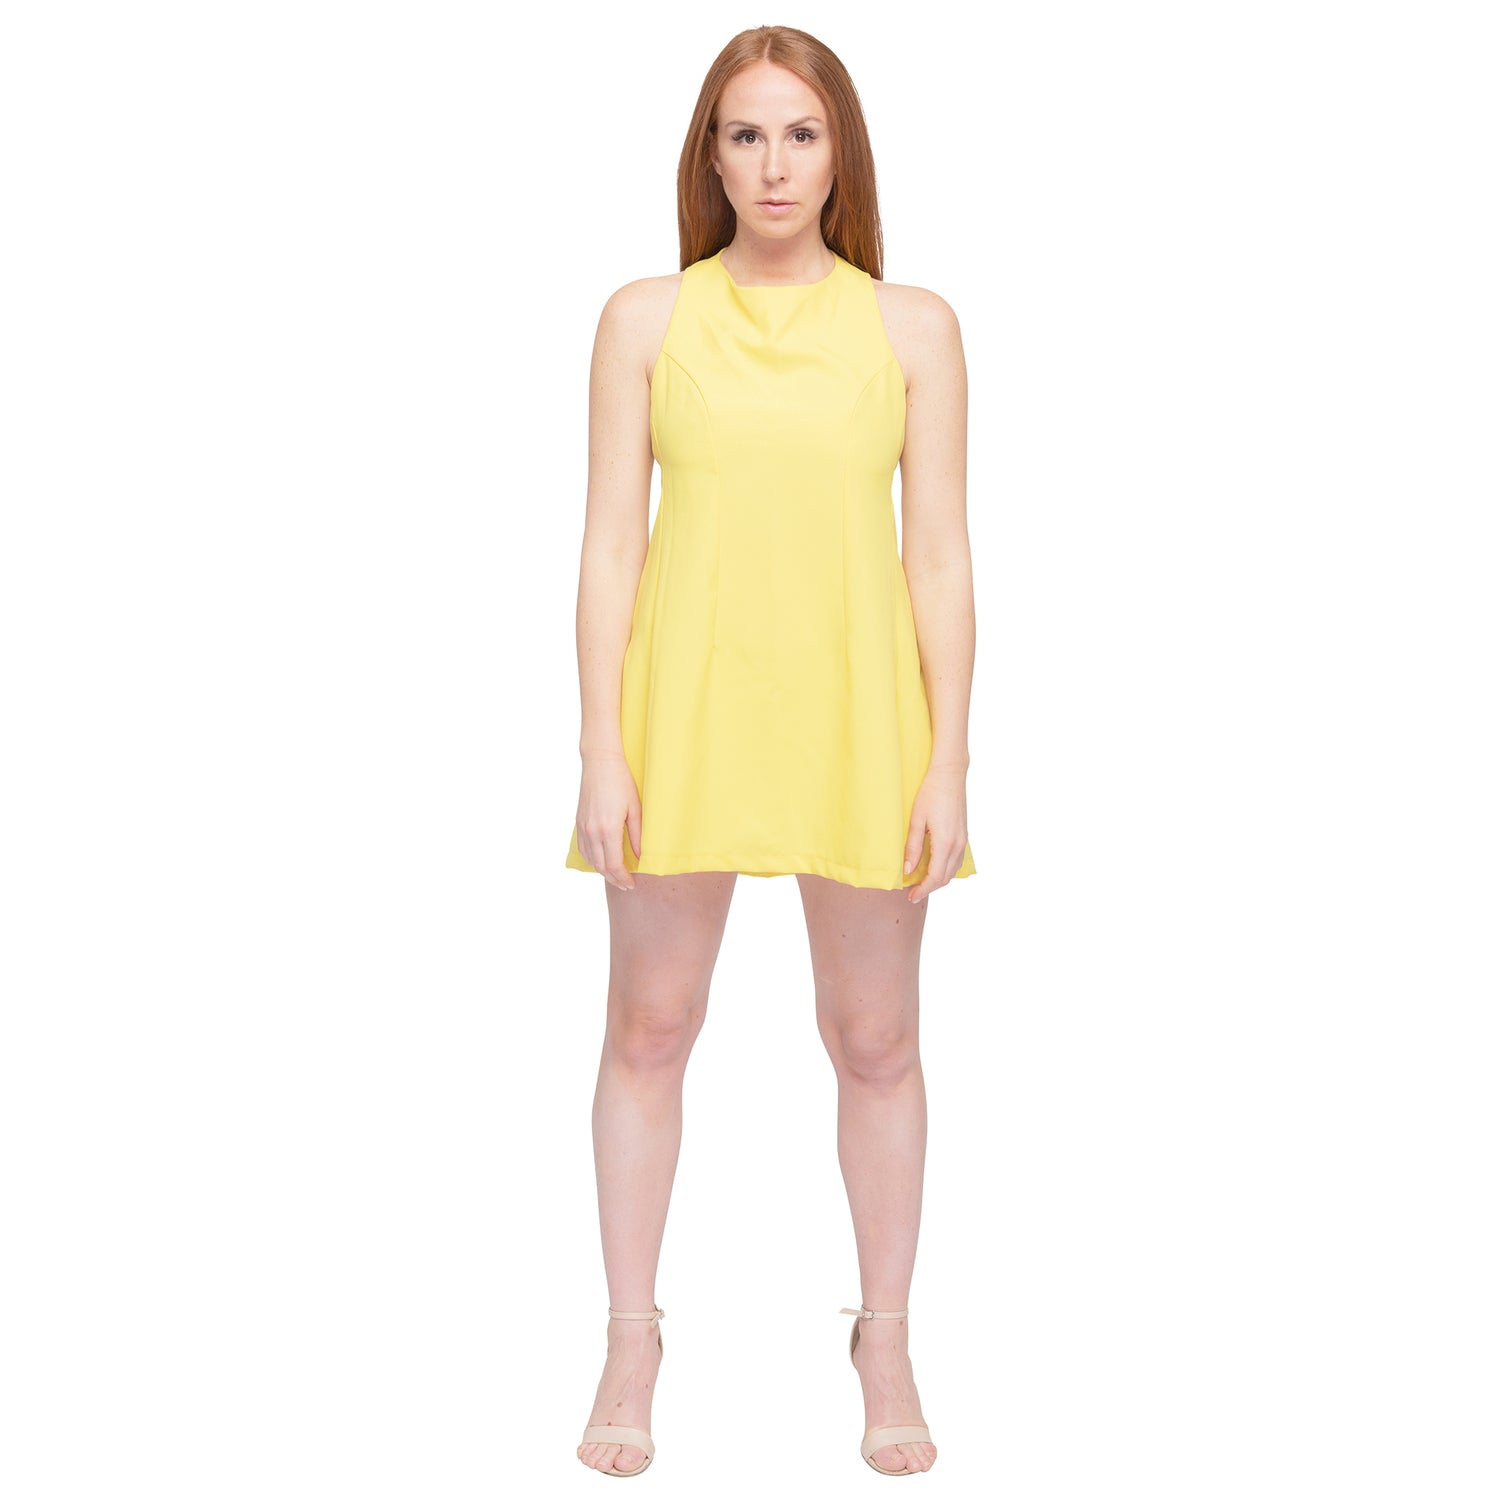 Yellow Sports Dress - casacomostyle